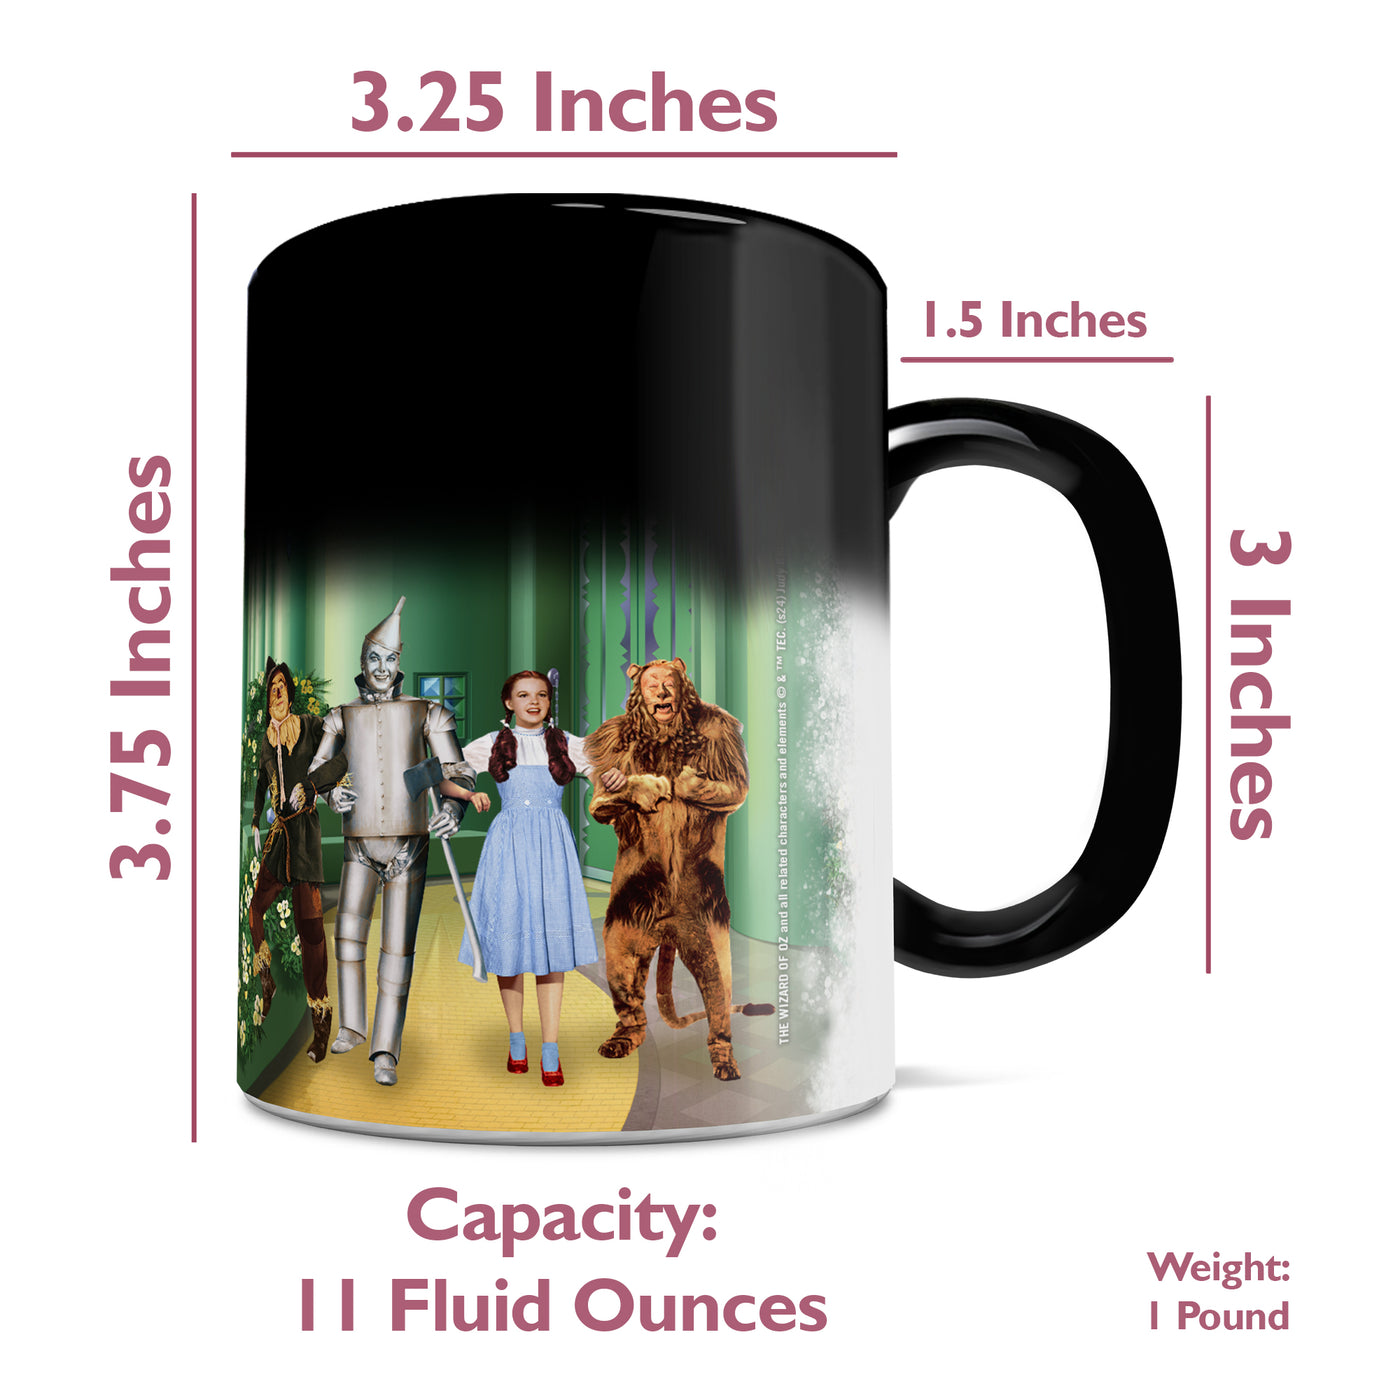 Exclusive The Wizard of Oz 85th Anniversary Heat-Sensitive Mug